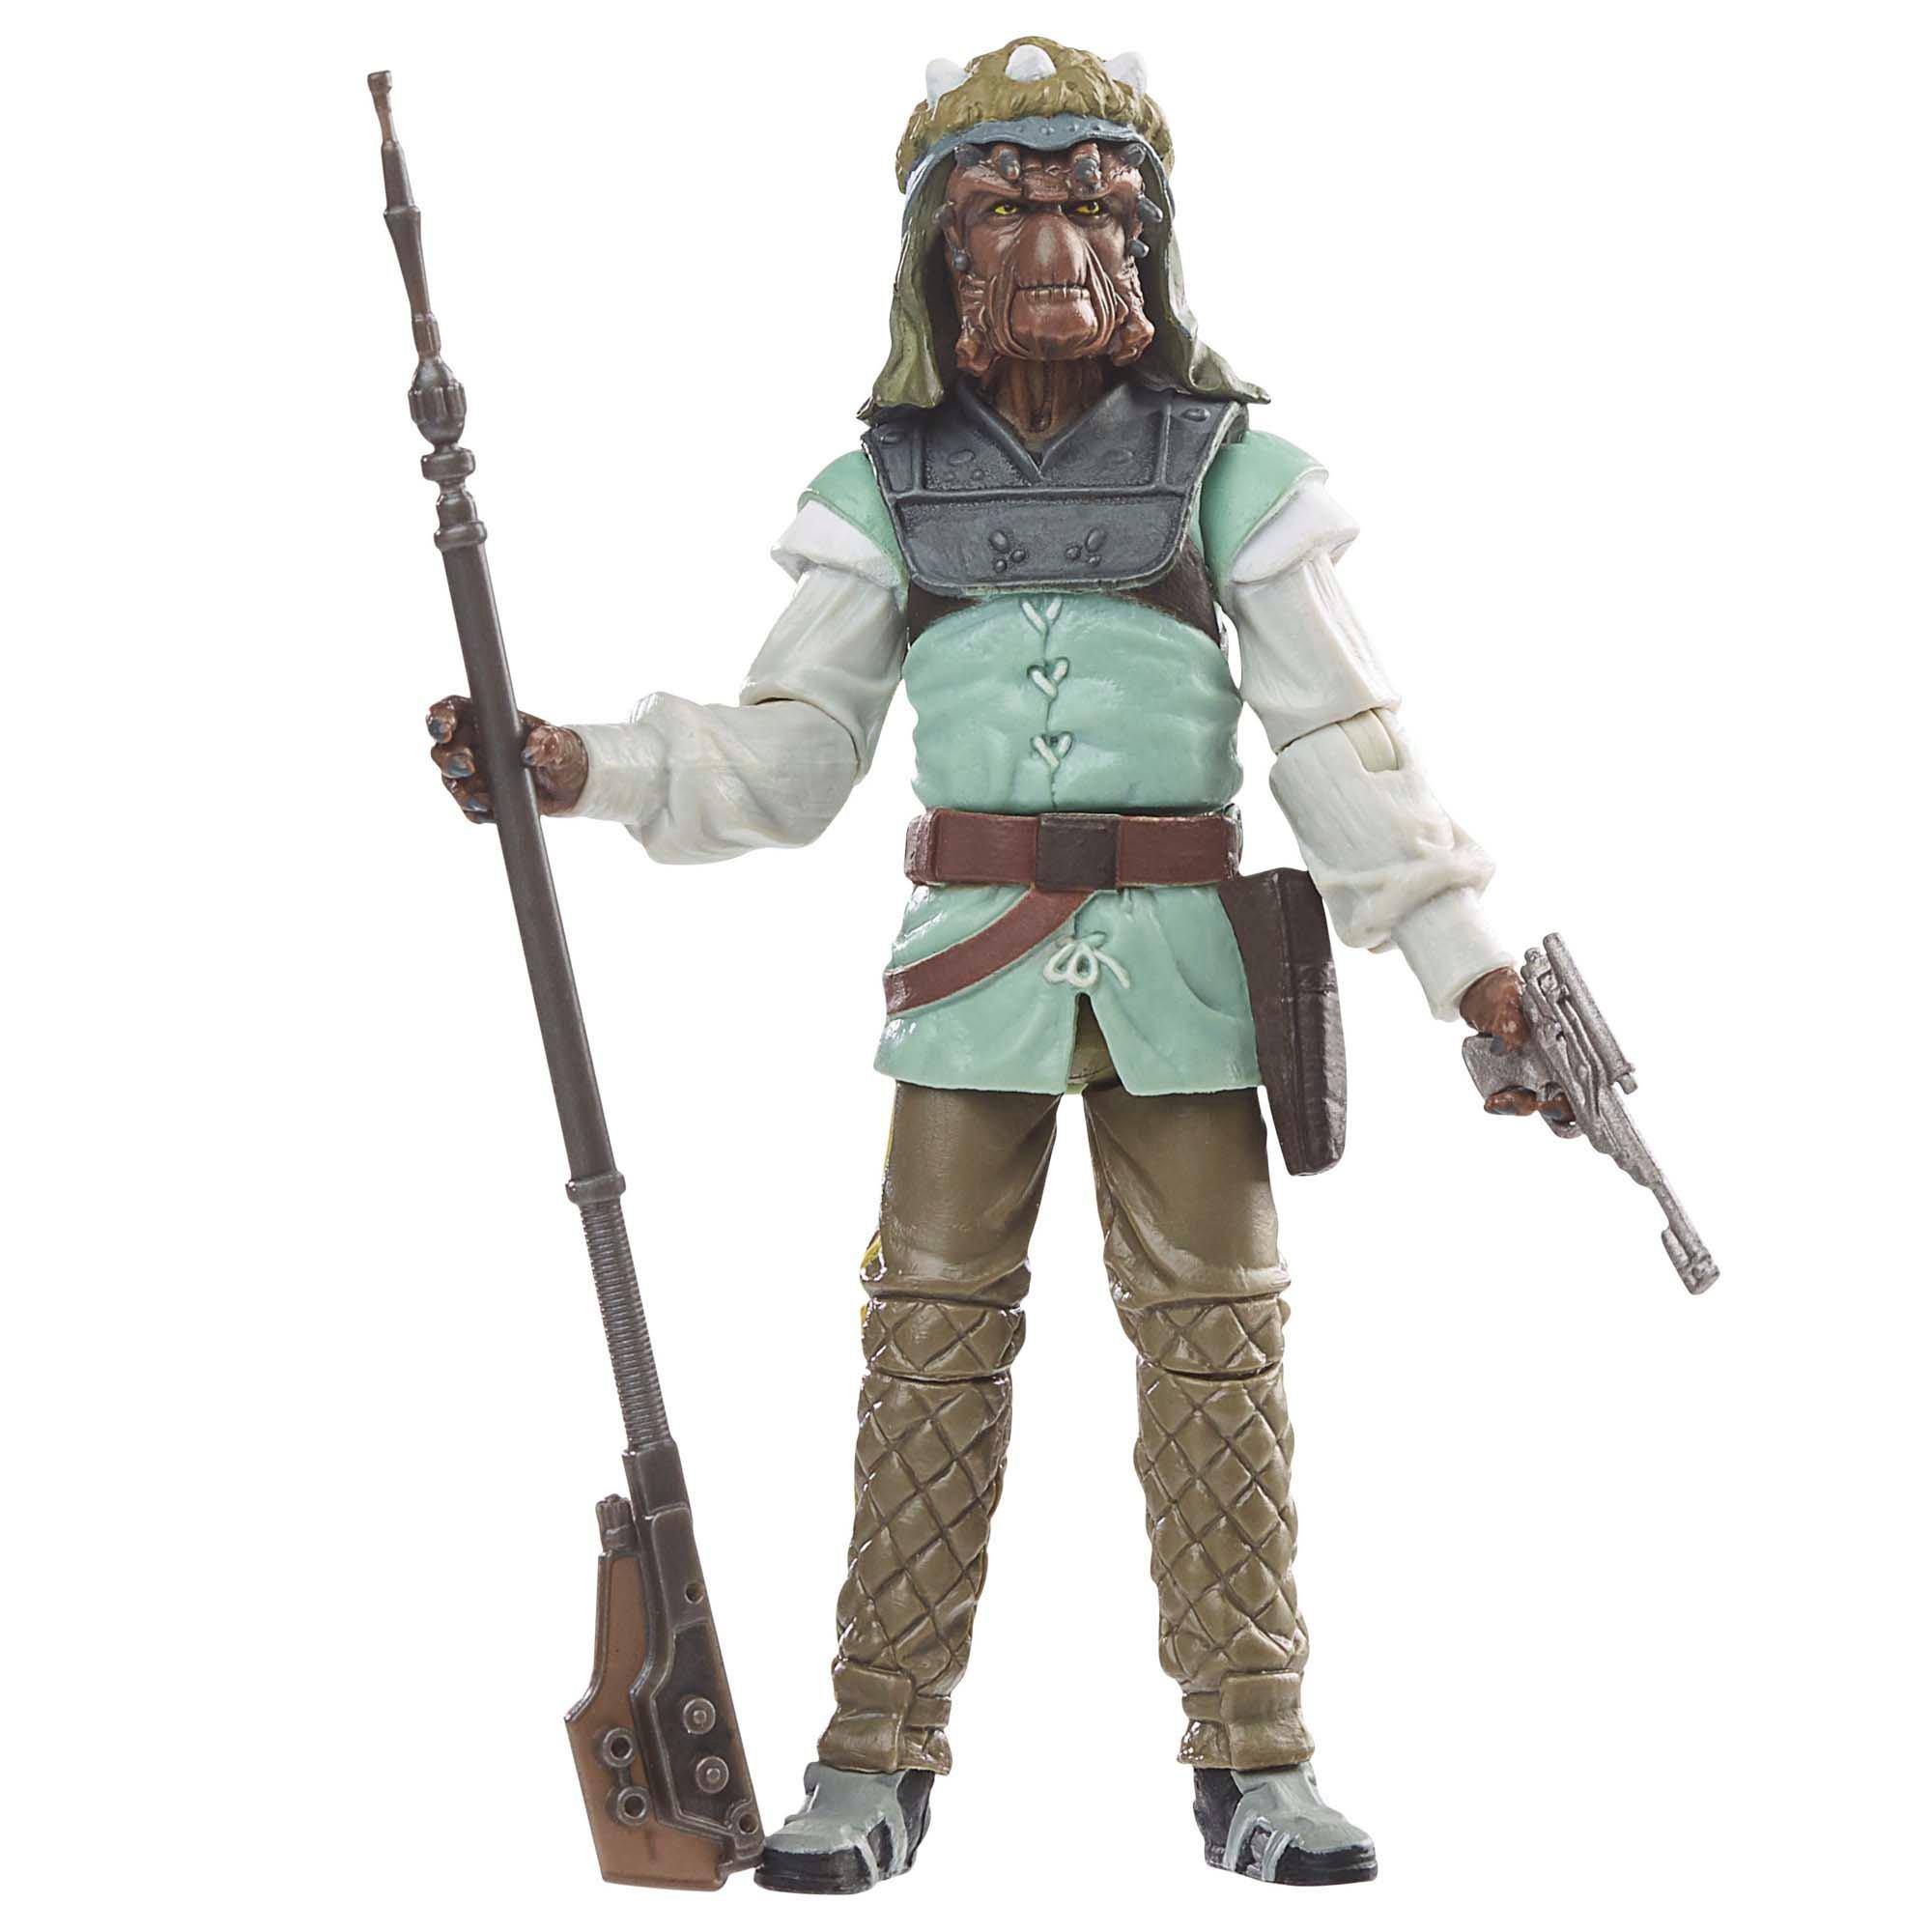 https://media.gamestop.com/i/gamestop/20001857/Hasbro-Star-Wars-The-Vintage-Collection-Star-Wars-Return-of-the-Jedi-Nikto-Skiff-Guard-3.75-in-Action-Figure?$pdp$